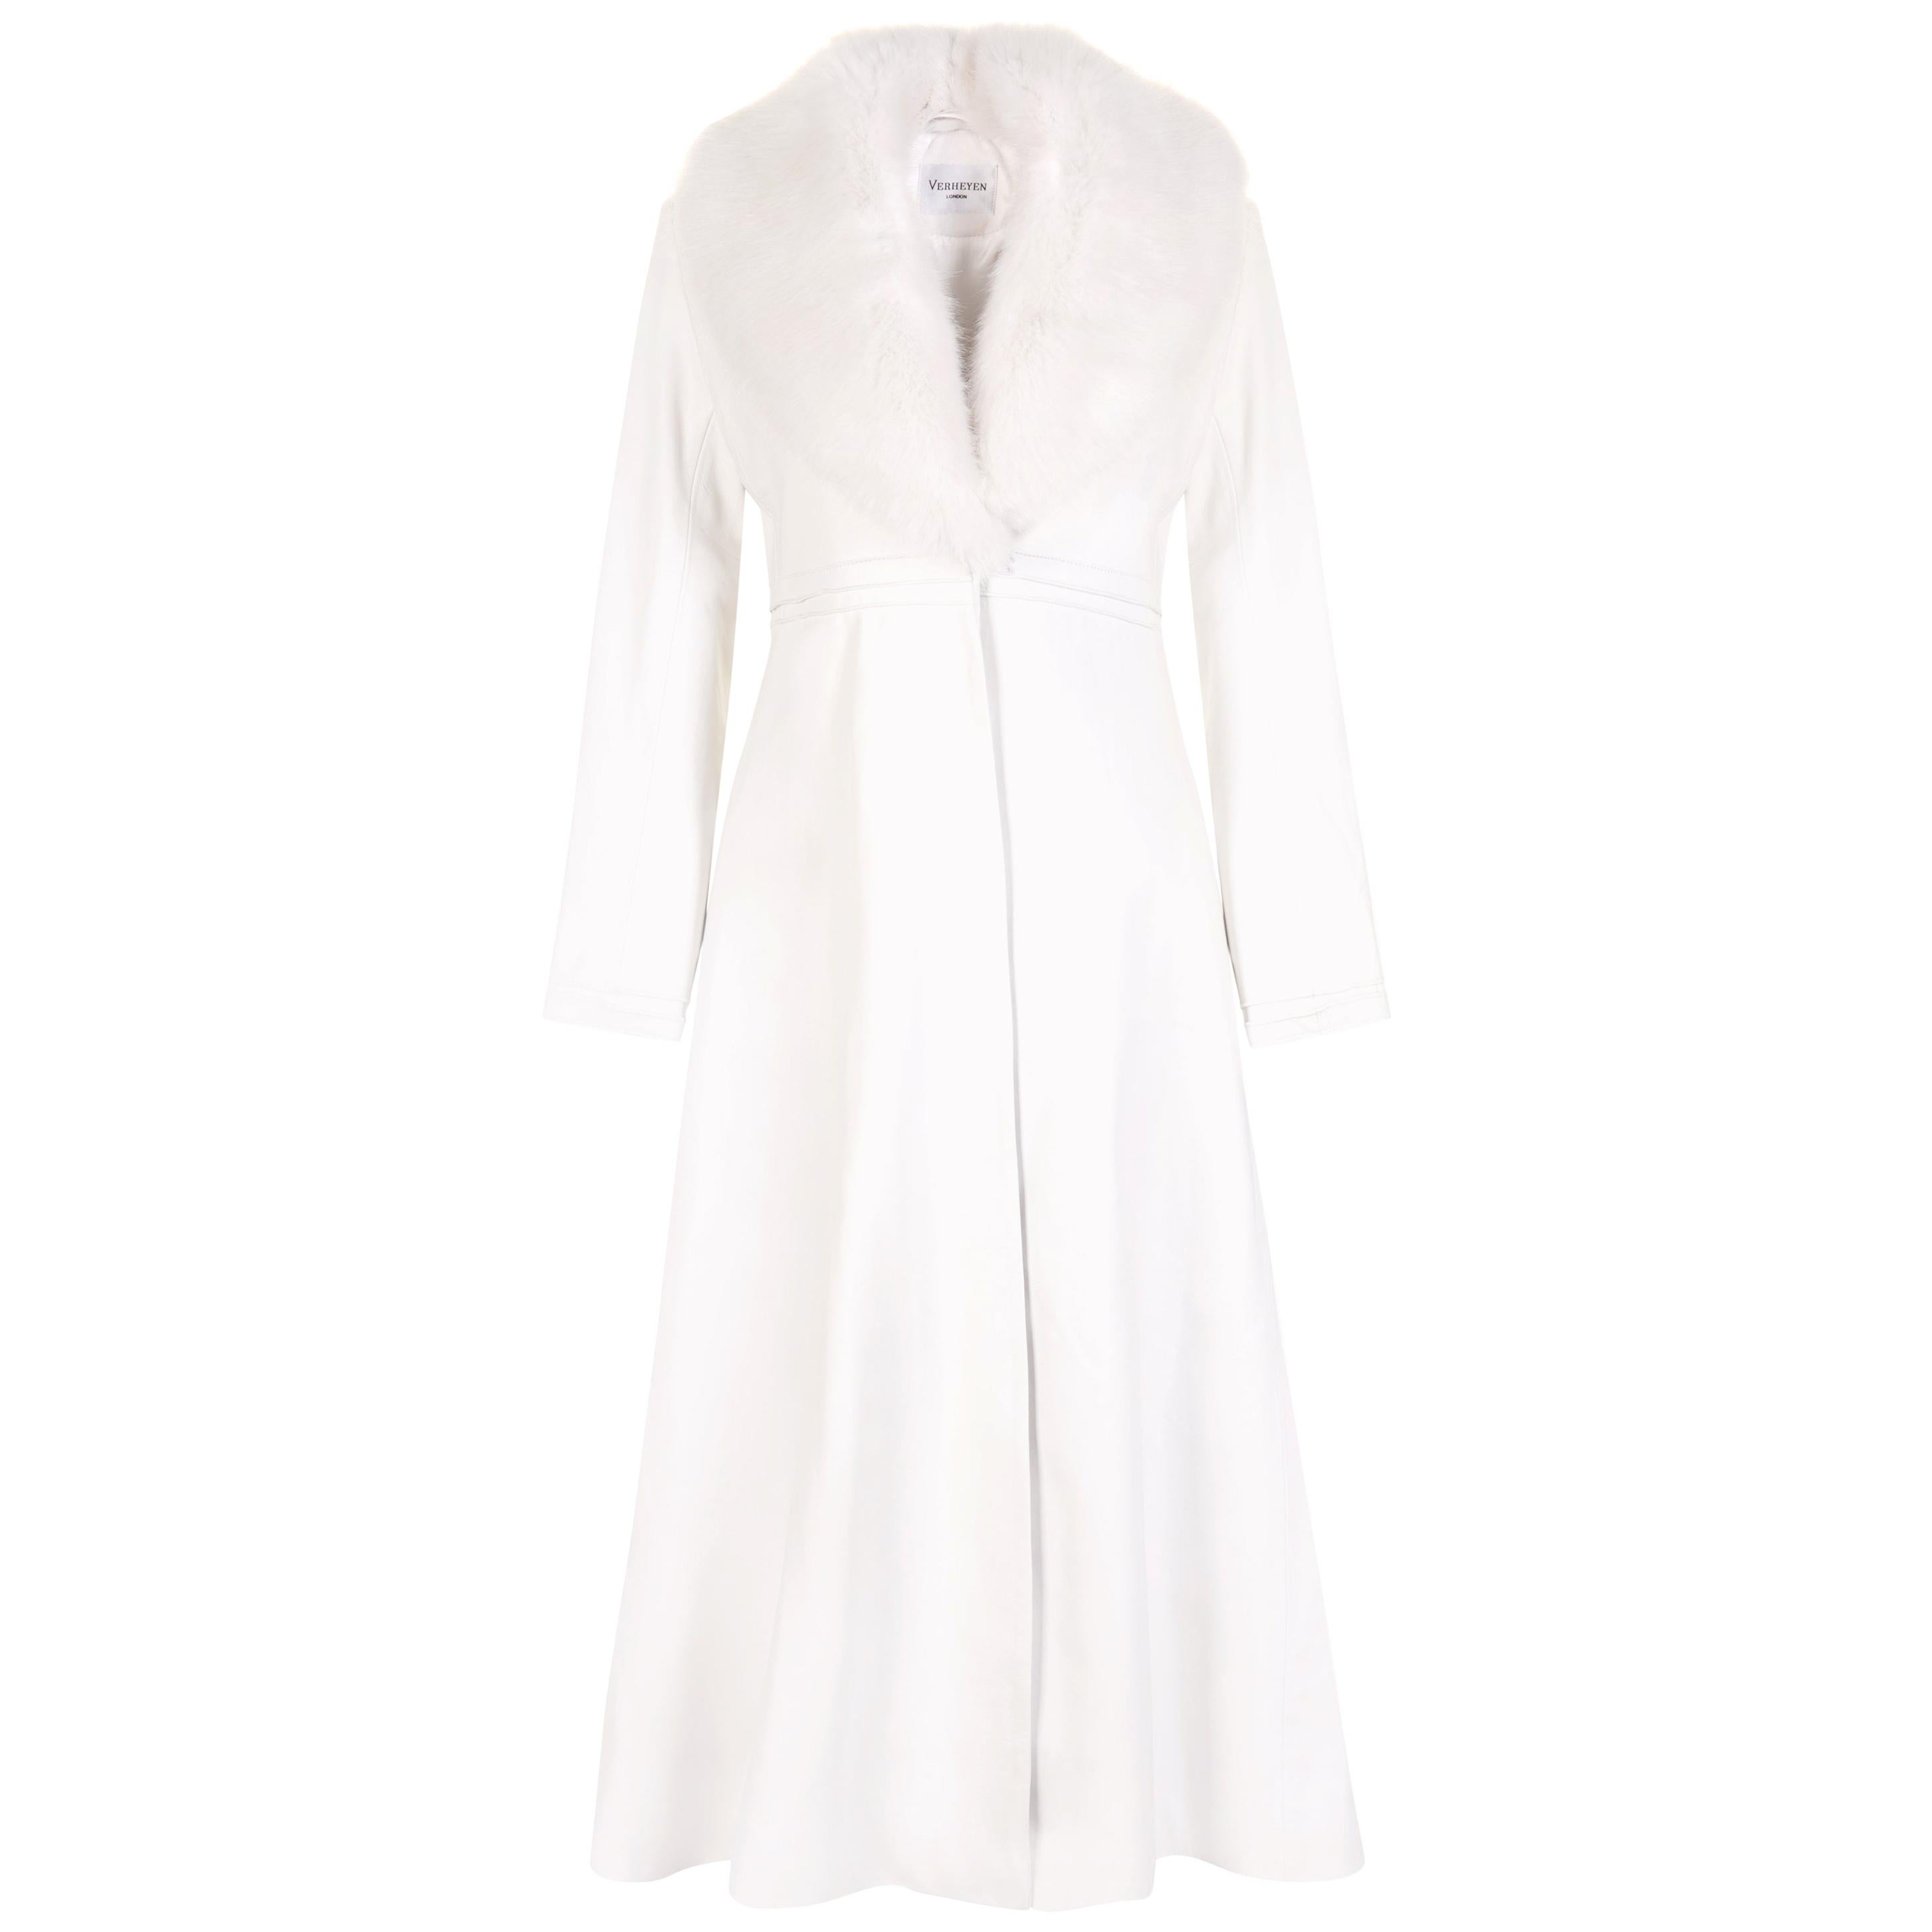 Verheyen London Edward Leather Coat in White with Faux Fur - Size uk 8  For Sale